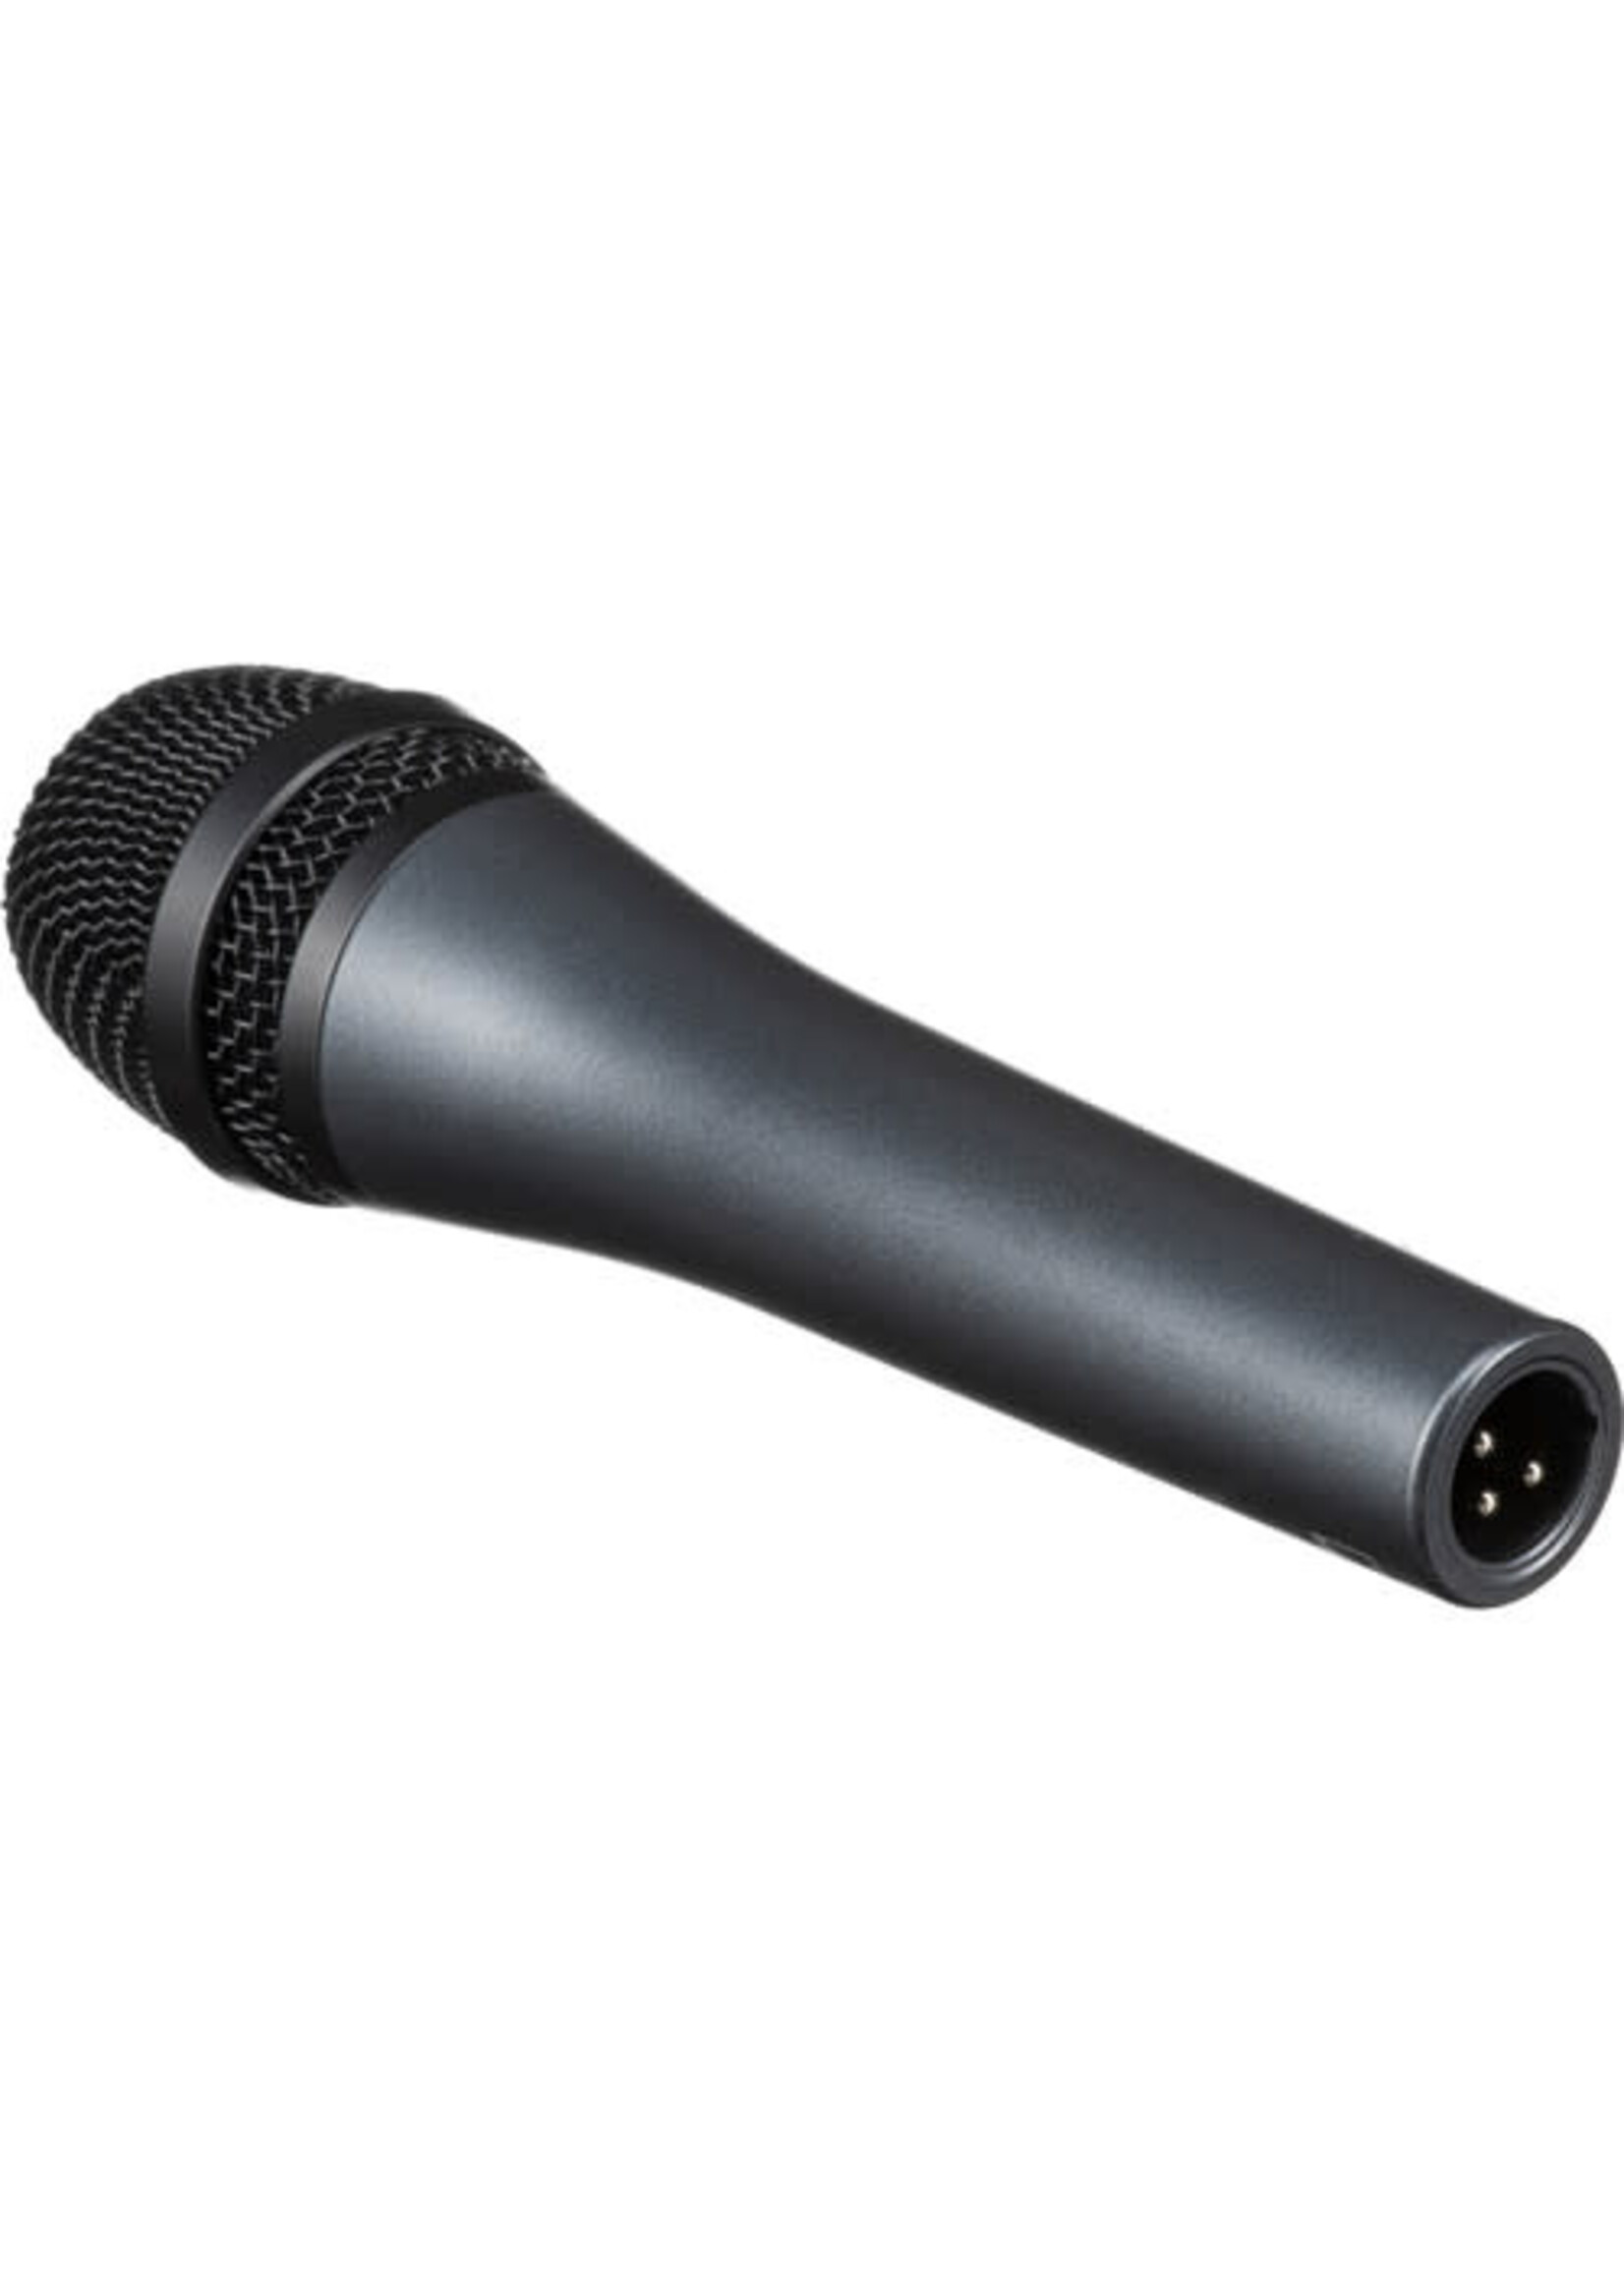 Sennheiser Sennheiser e 835 Cardioid Dynamic Vocal Microphone